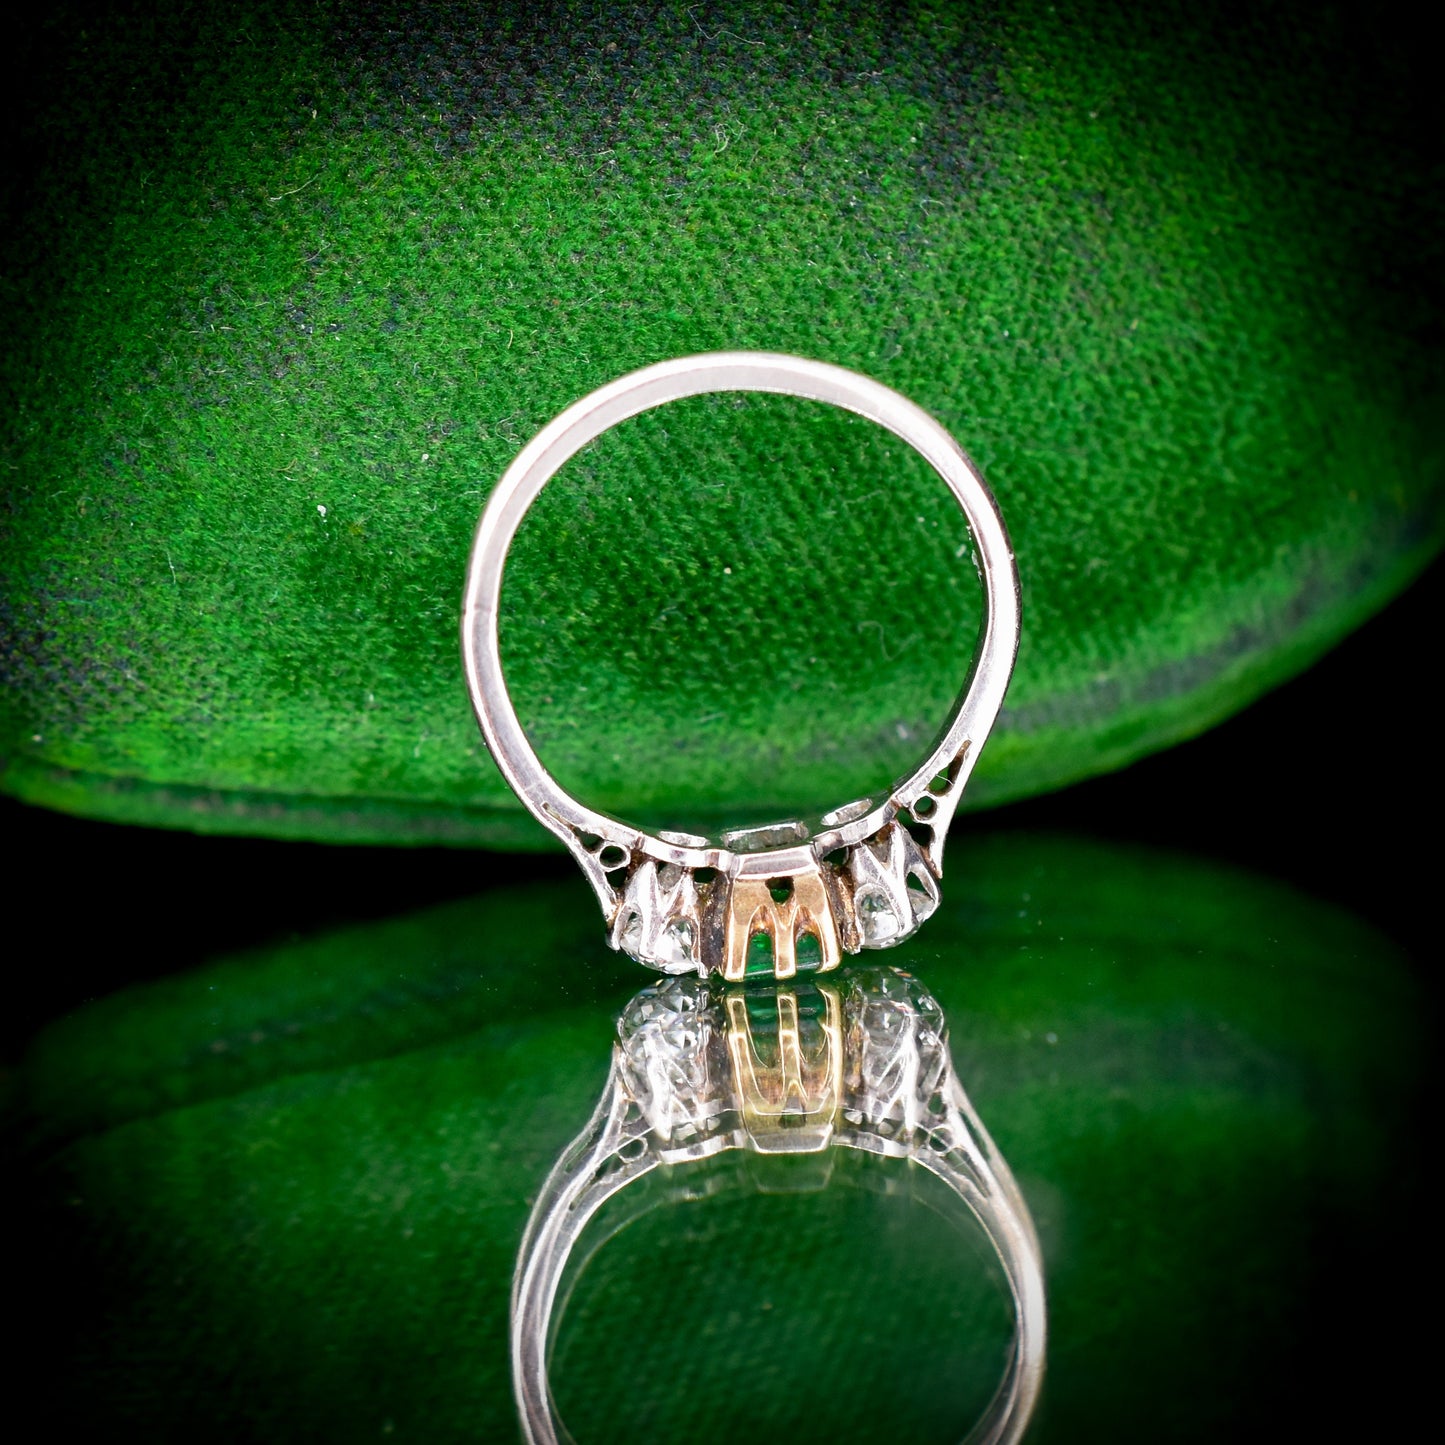 Art Deco Emerald and Diamond Trilogy Three Stone Platinum Ring